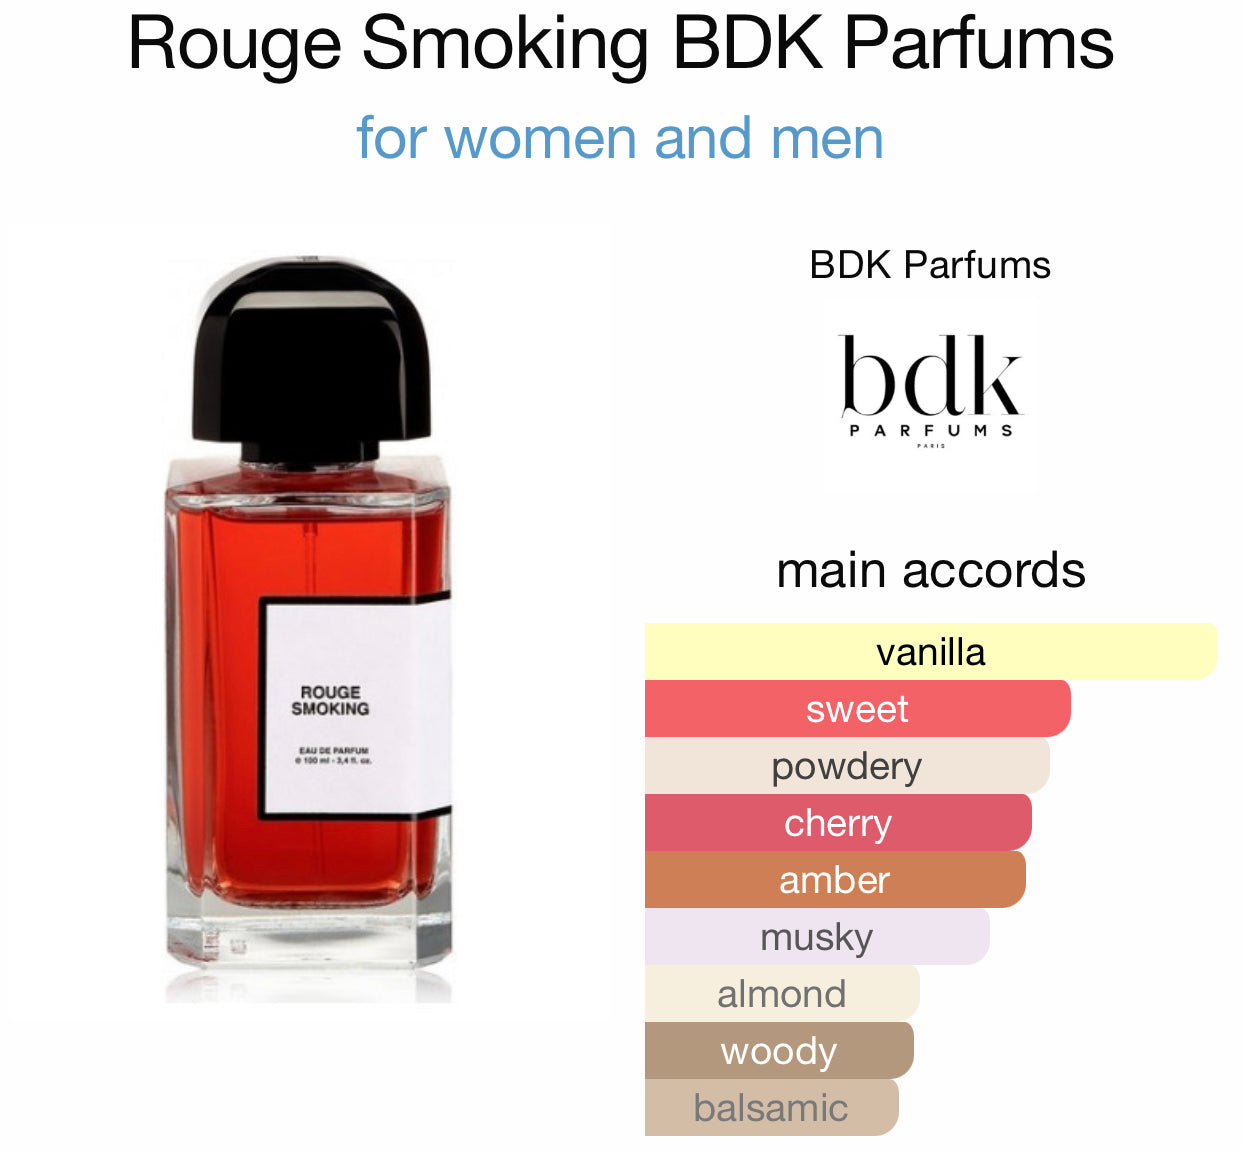 Inspired by Rouge Smoking Eau De Parfum